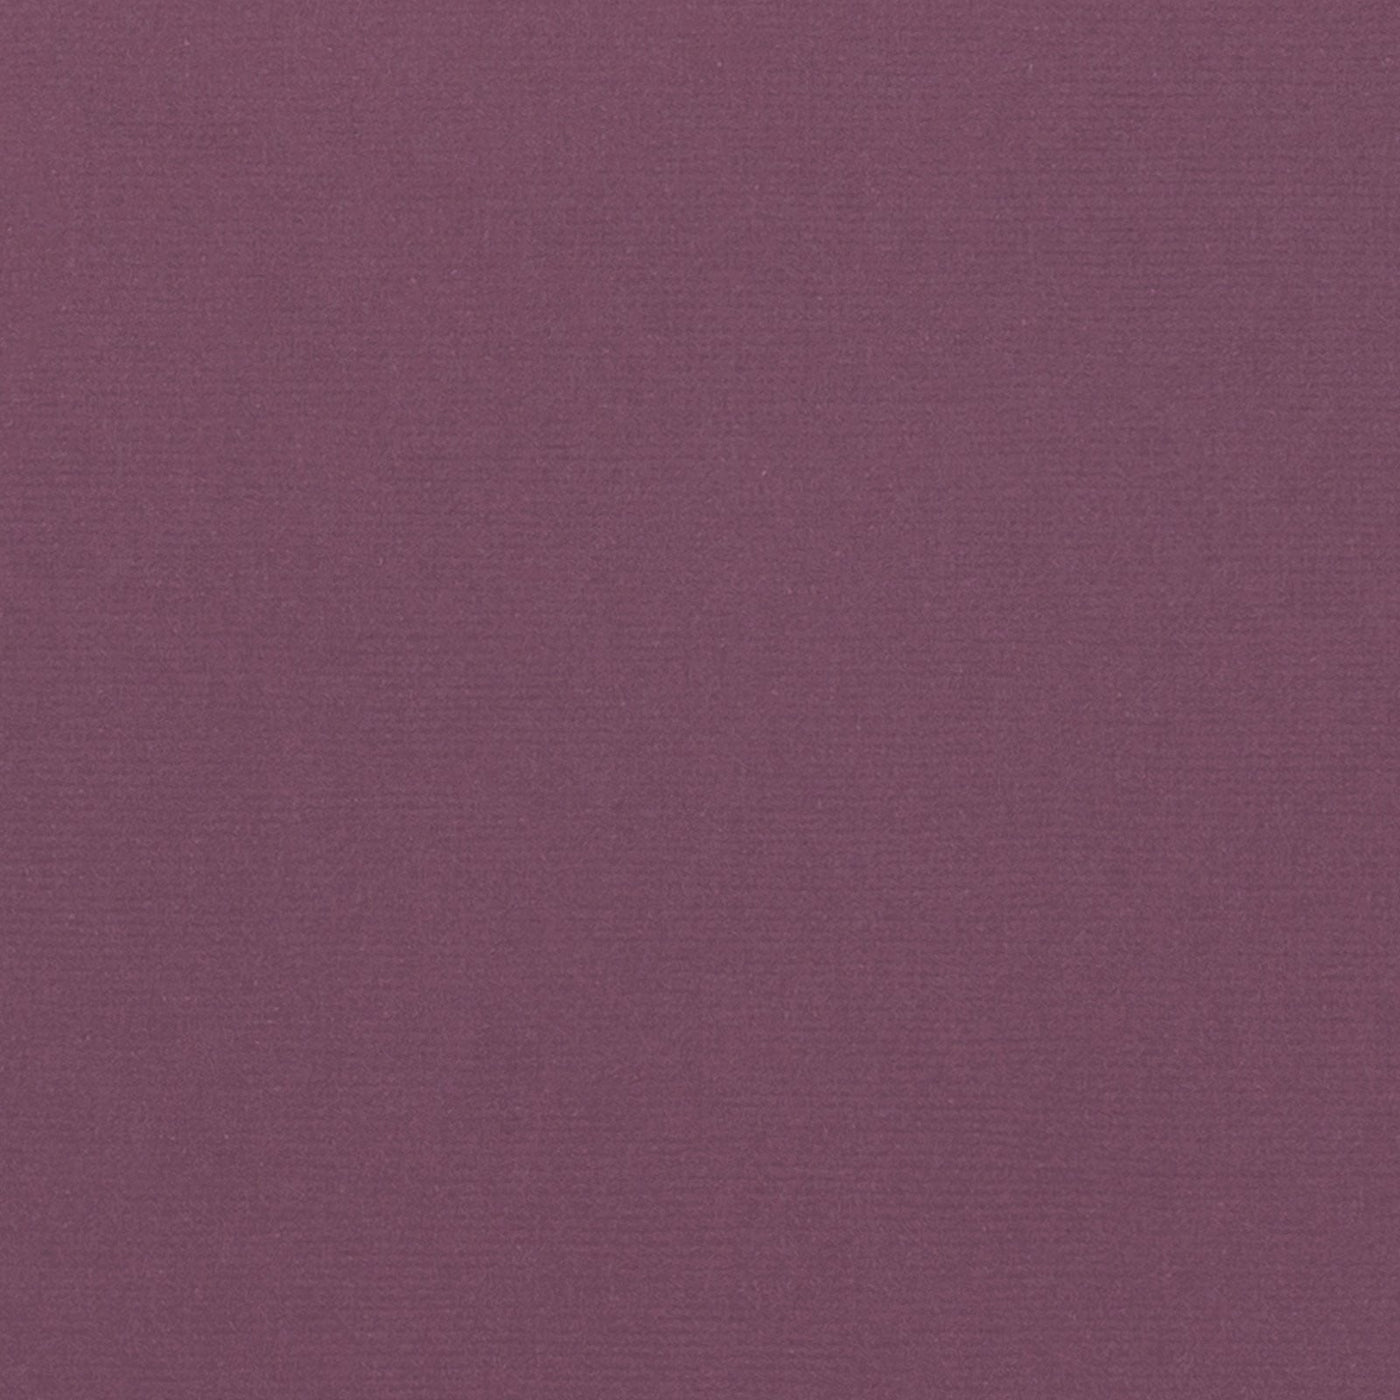 WINE dark burgundy cardstock - 12x12 inch - 80 lb - textured scrapbook paper - American Crafts